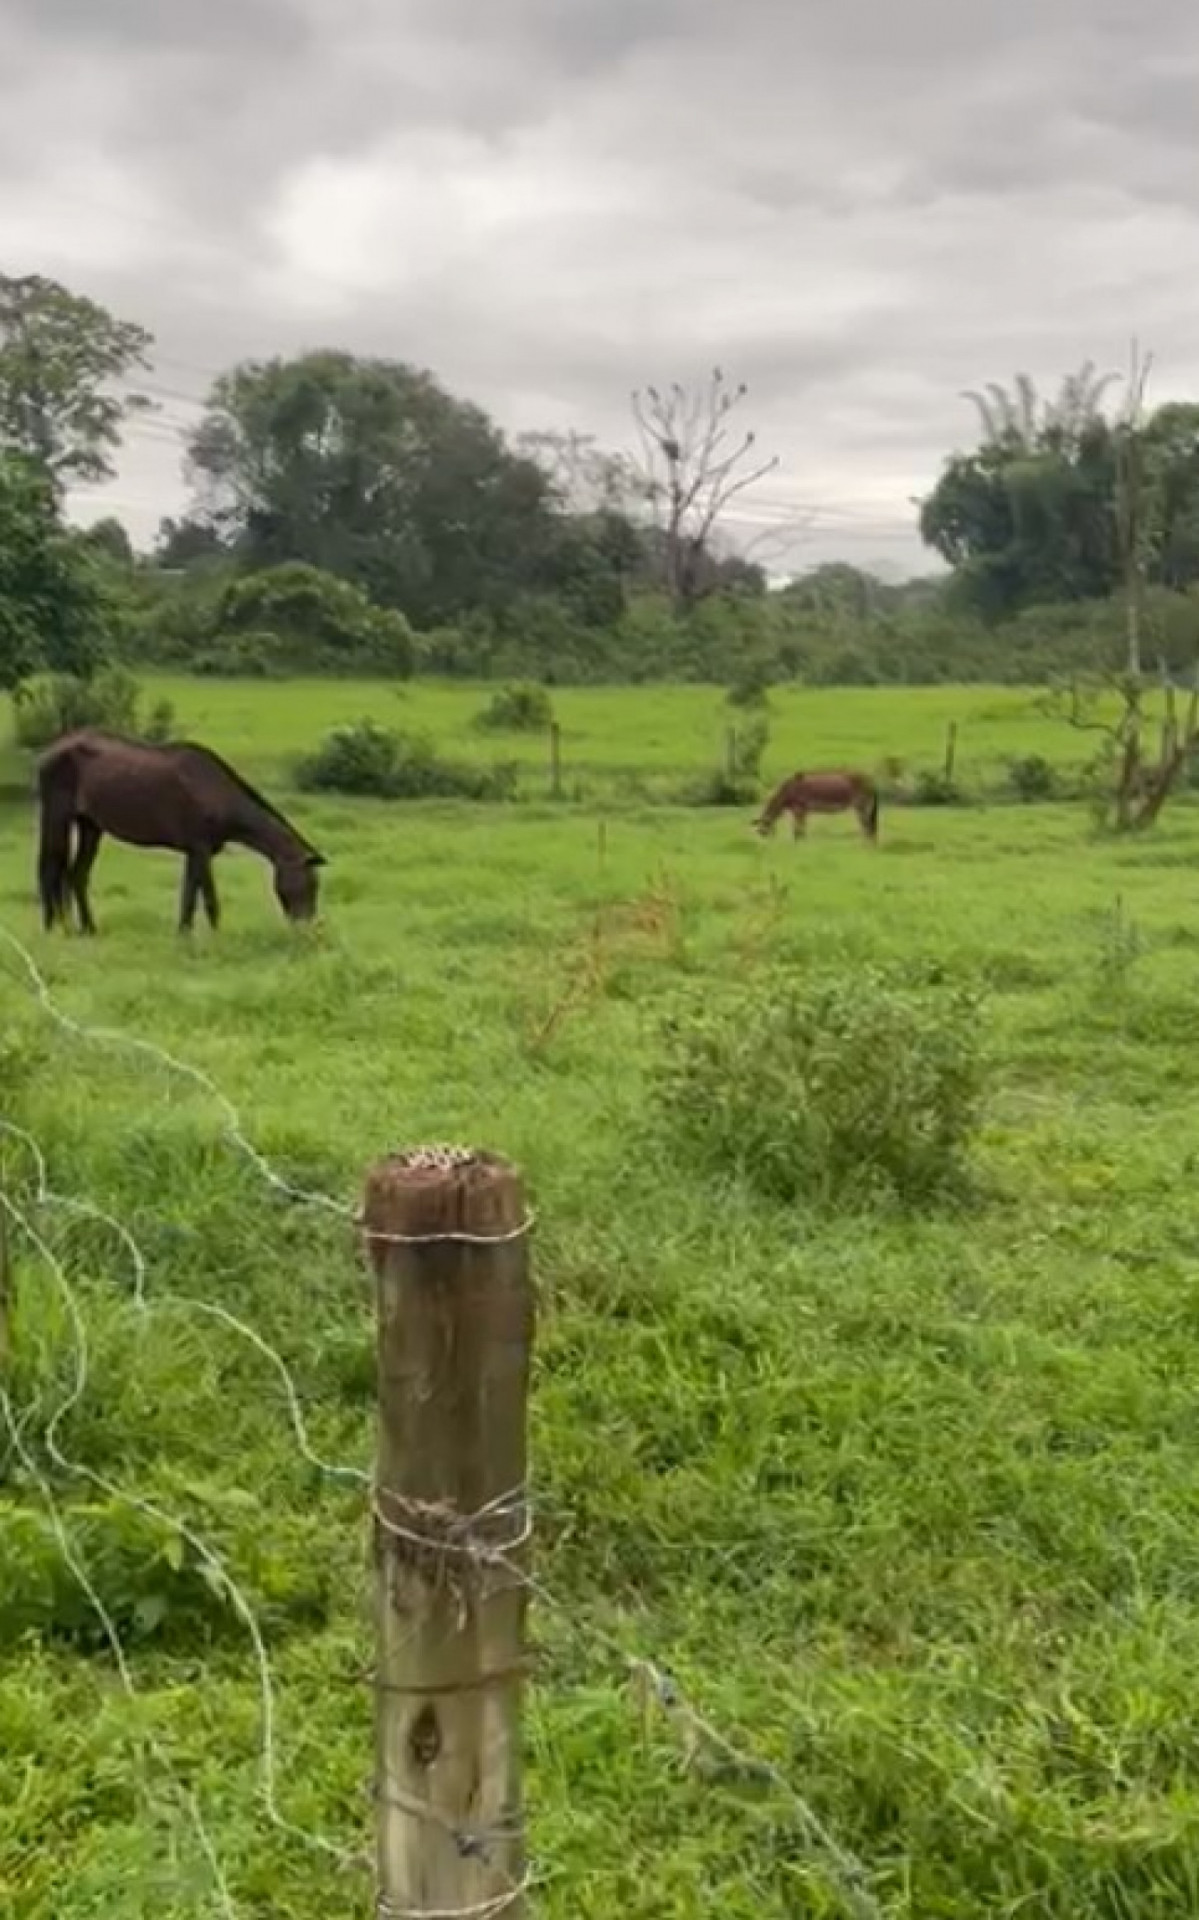 Polícia fecha abatedouro clandestino de cavalos no Sul de SC - NSC